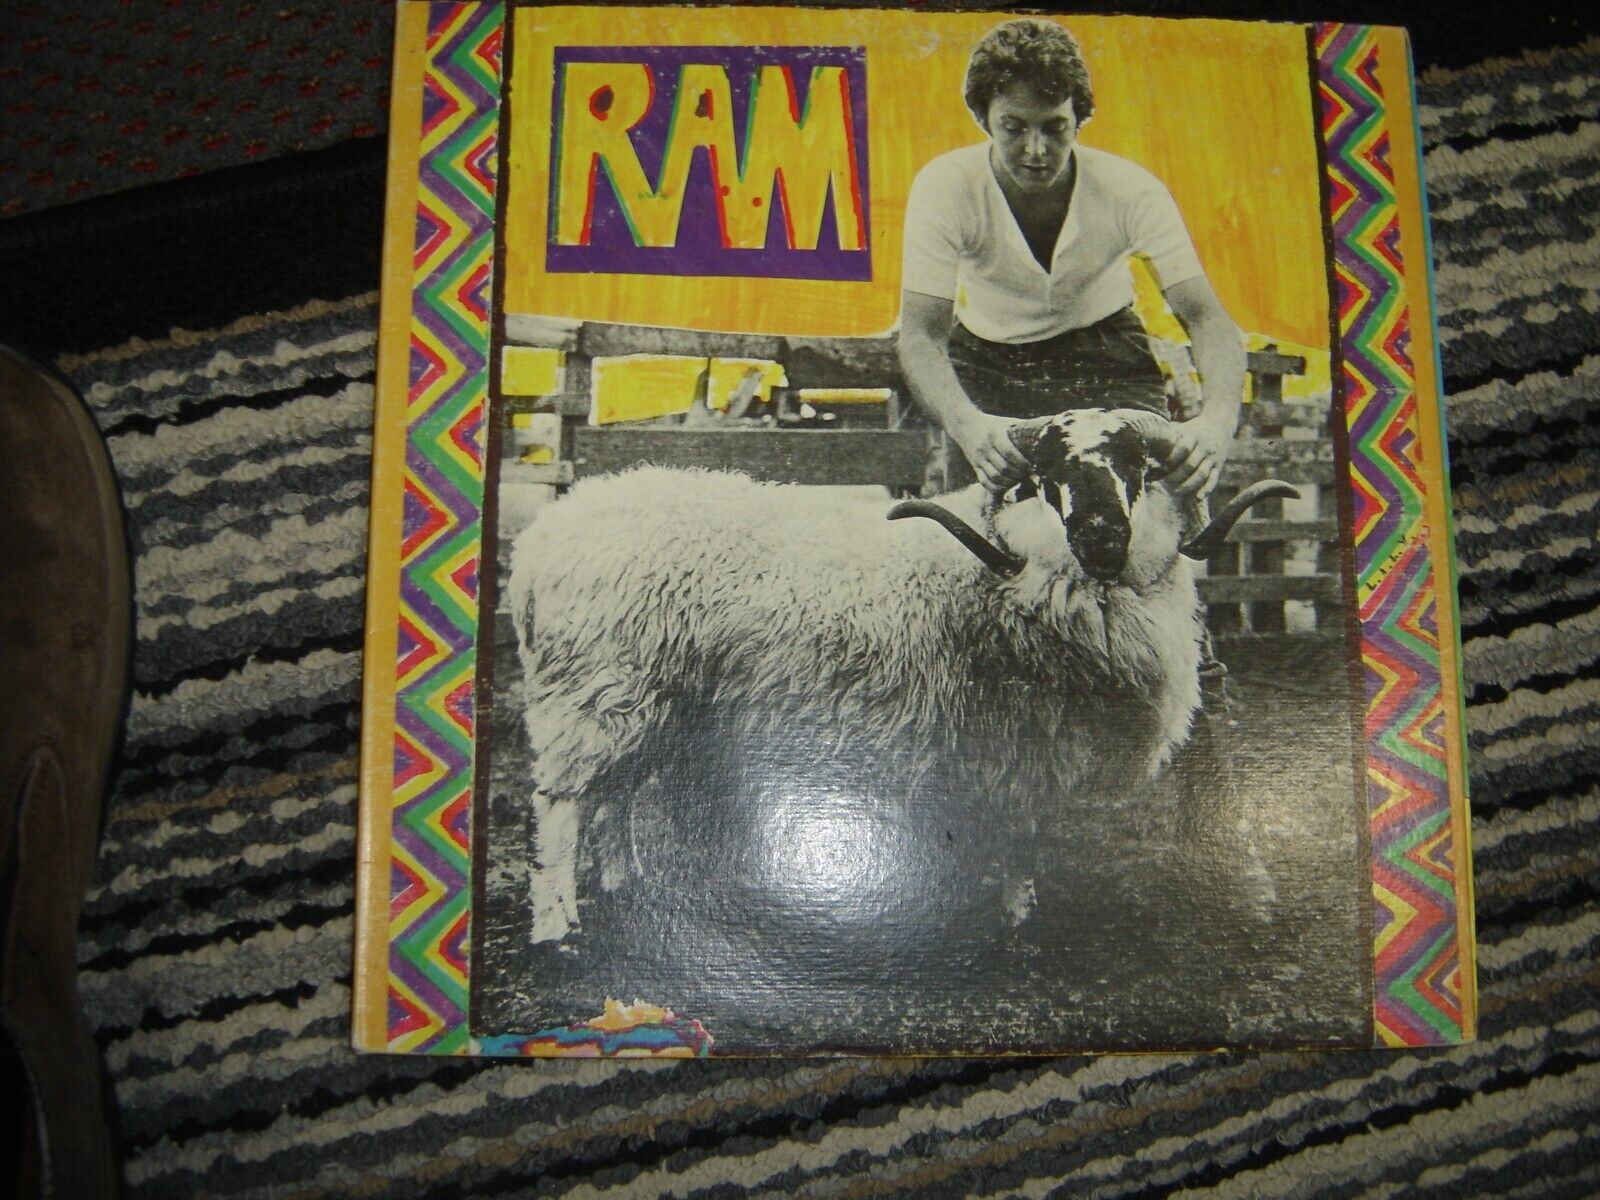 Paul And Linda McCartney - Ram 1971 USA Vinyl LP E/G